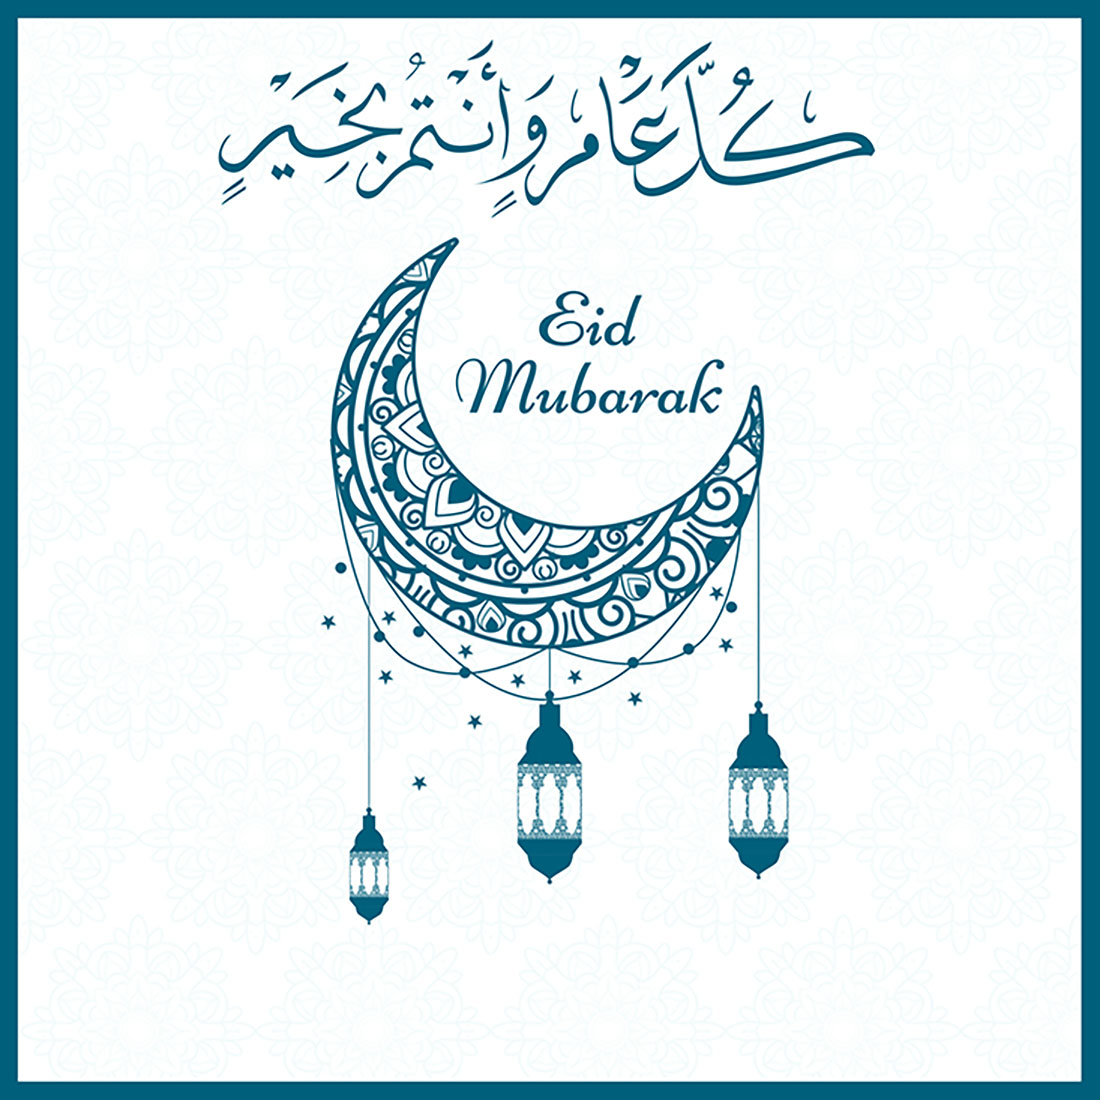 Eid Poster for Social Media cover image.